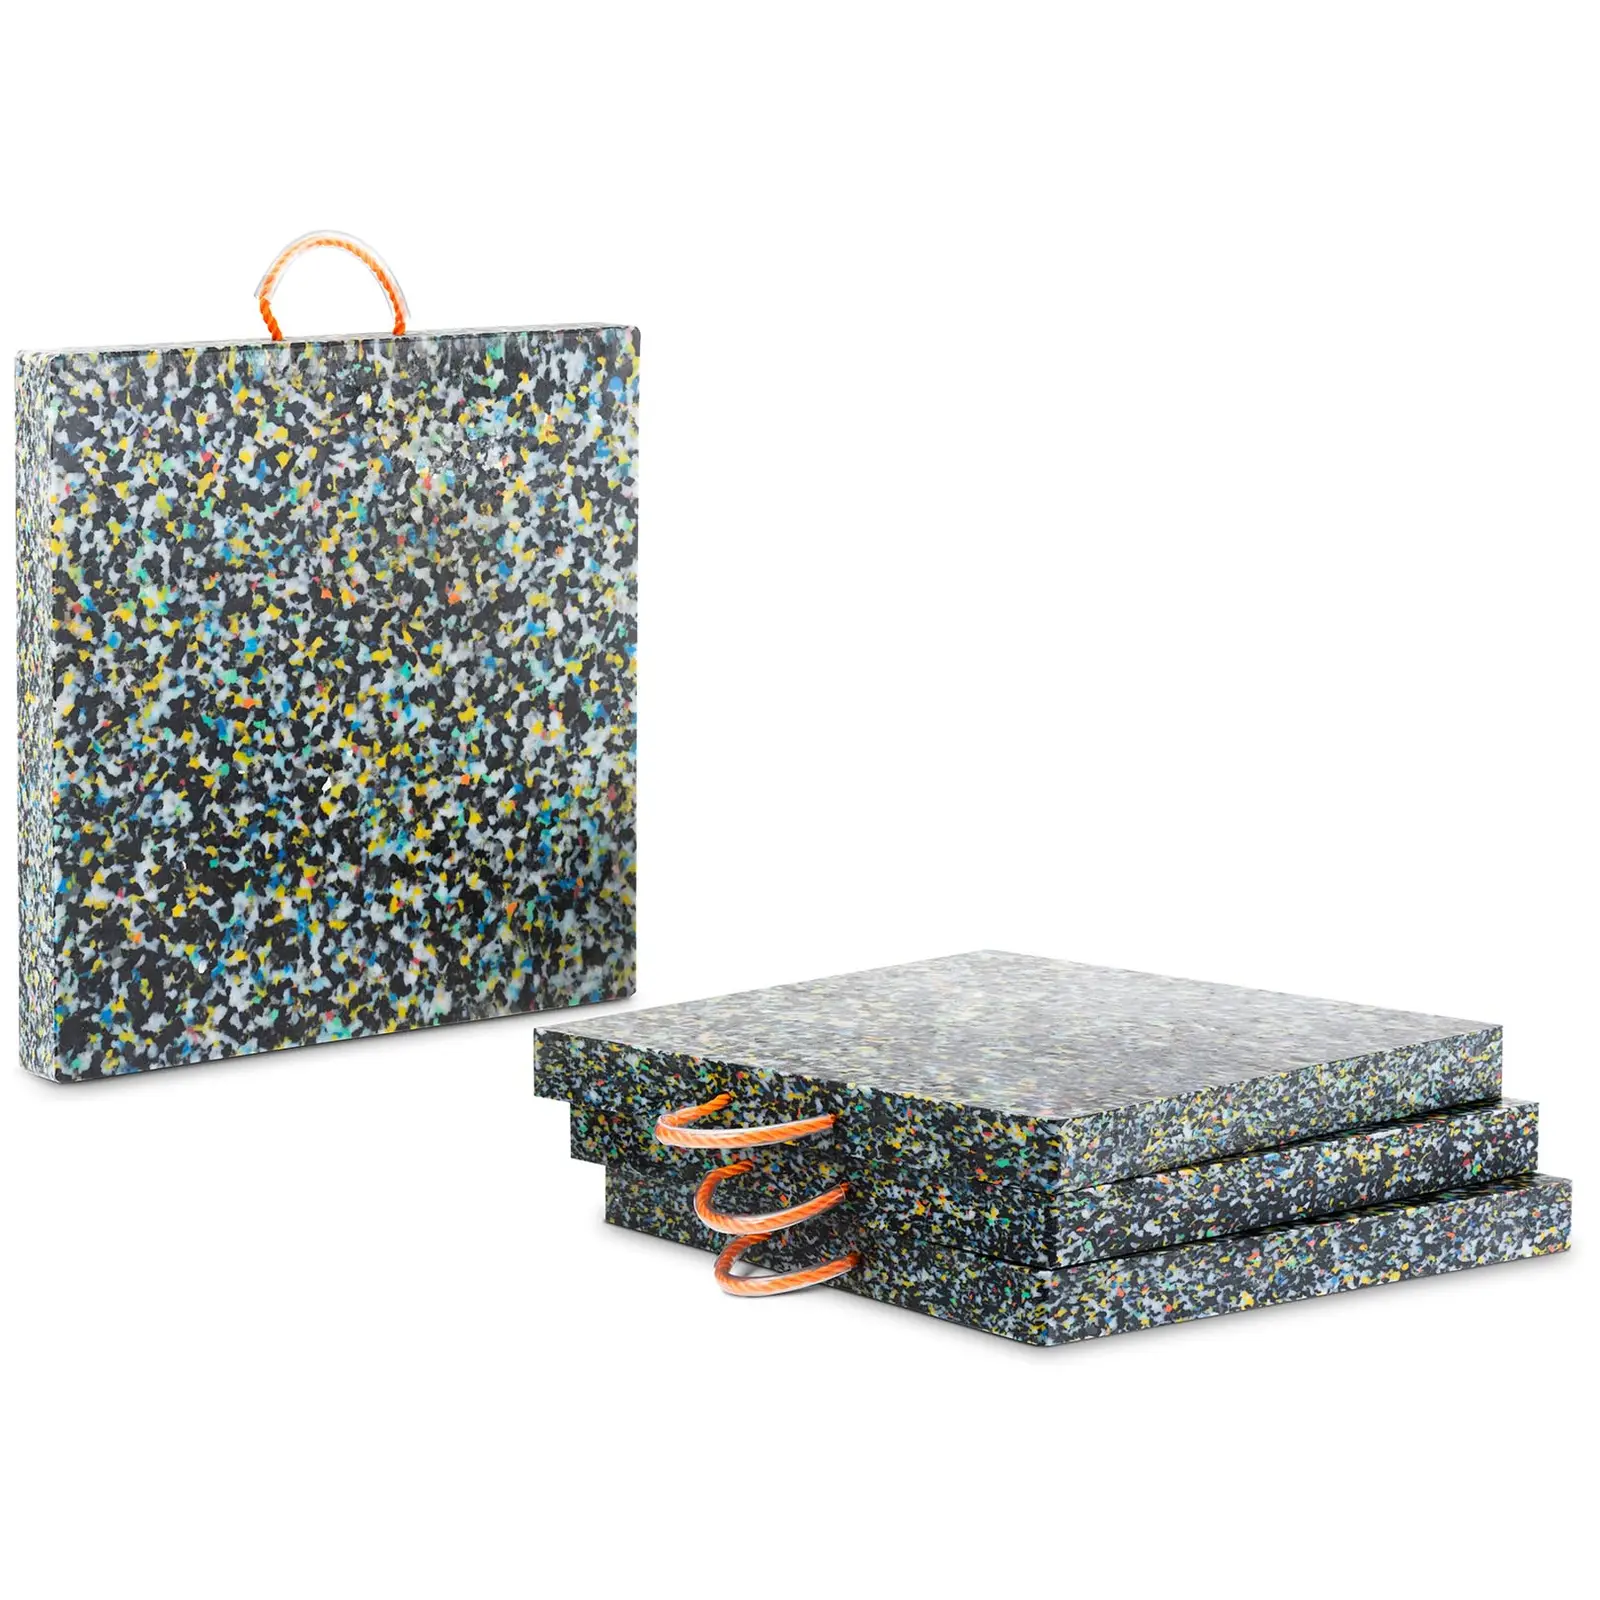 Kranplatten - 60 x 60 x 6 cm - Traglast bis zu 25.000 kg - 4 Stück